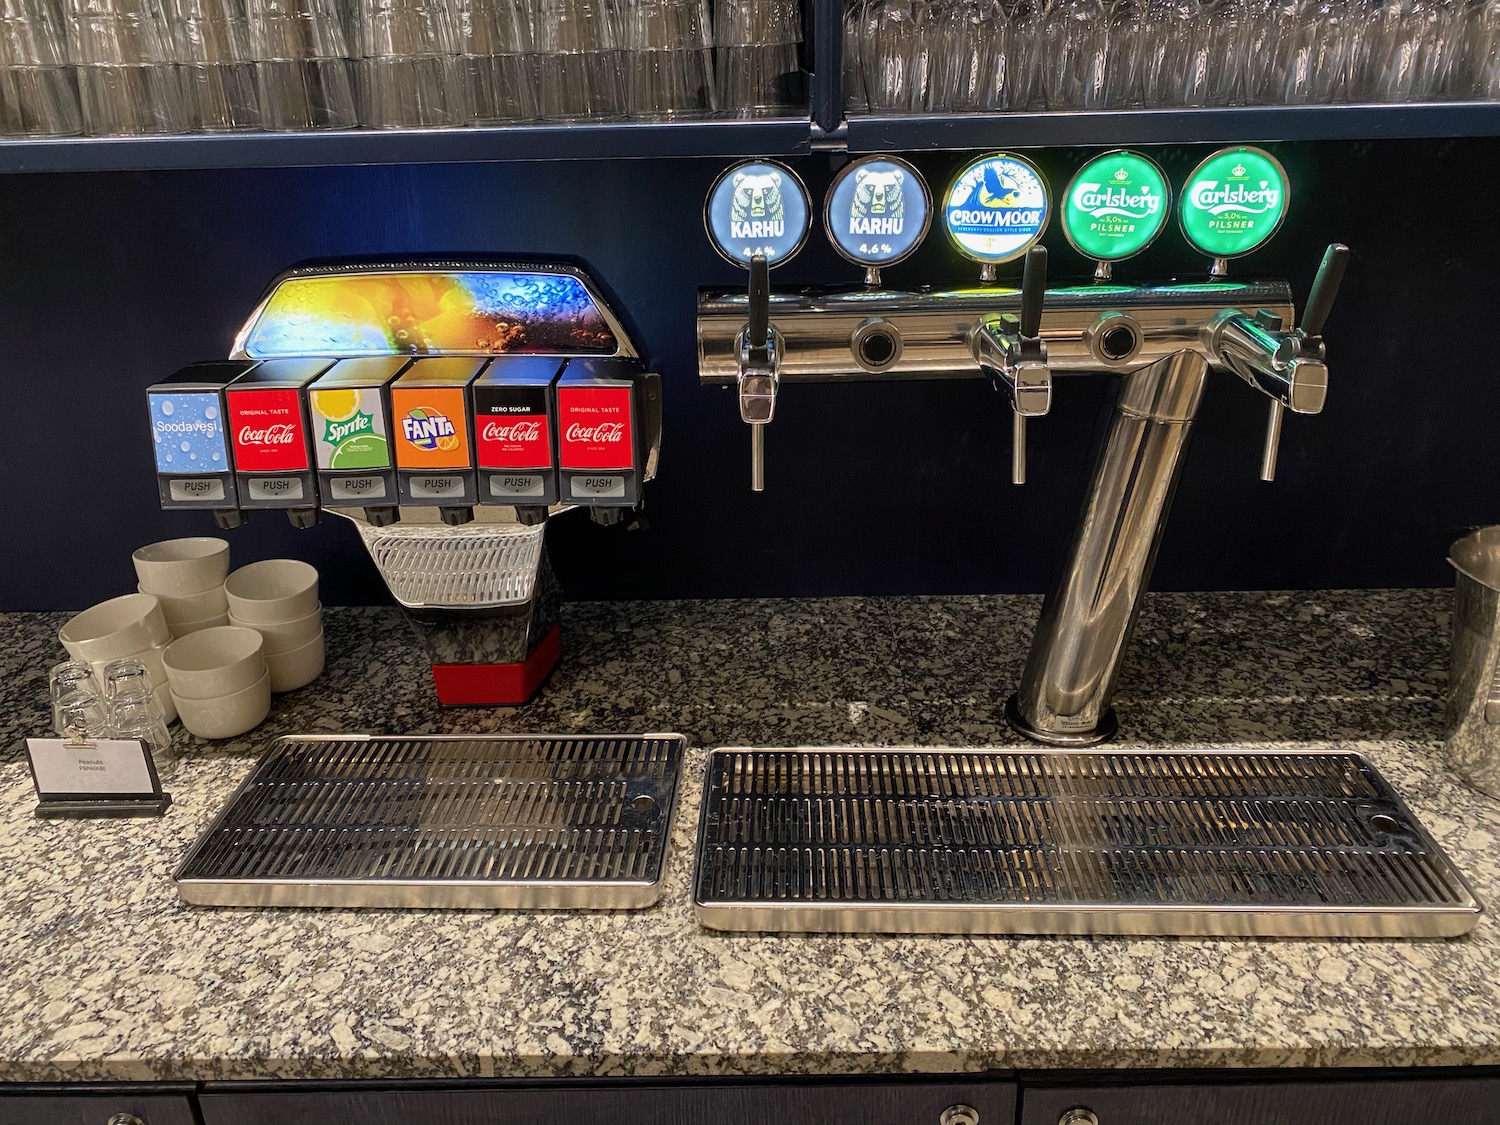 a soda dispenser and a drink dispenser